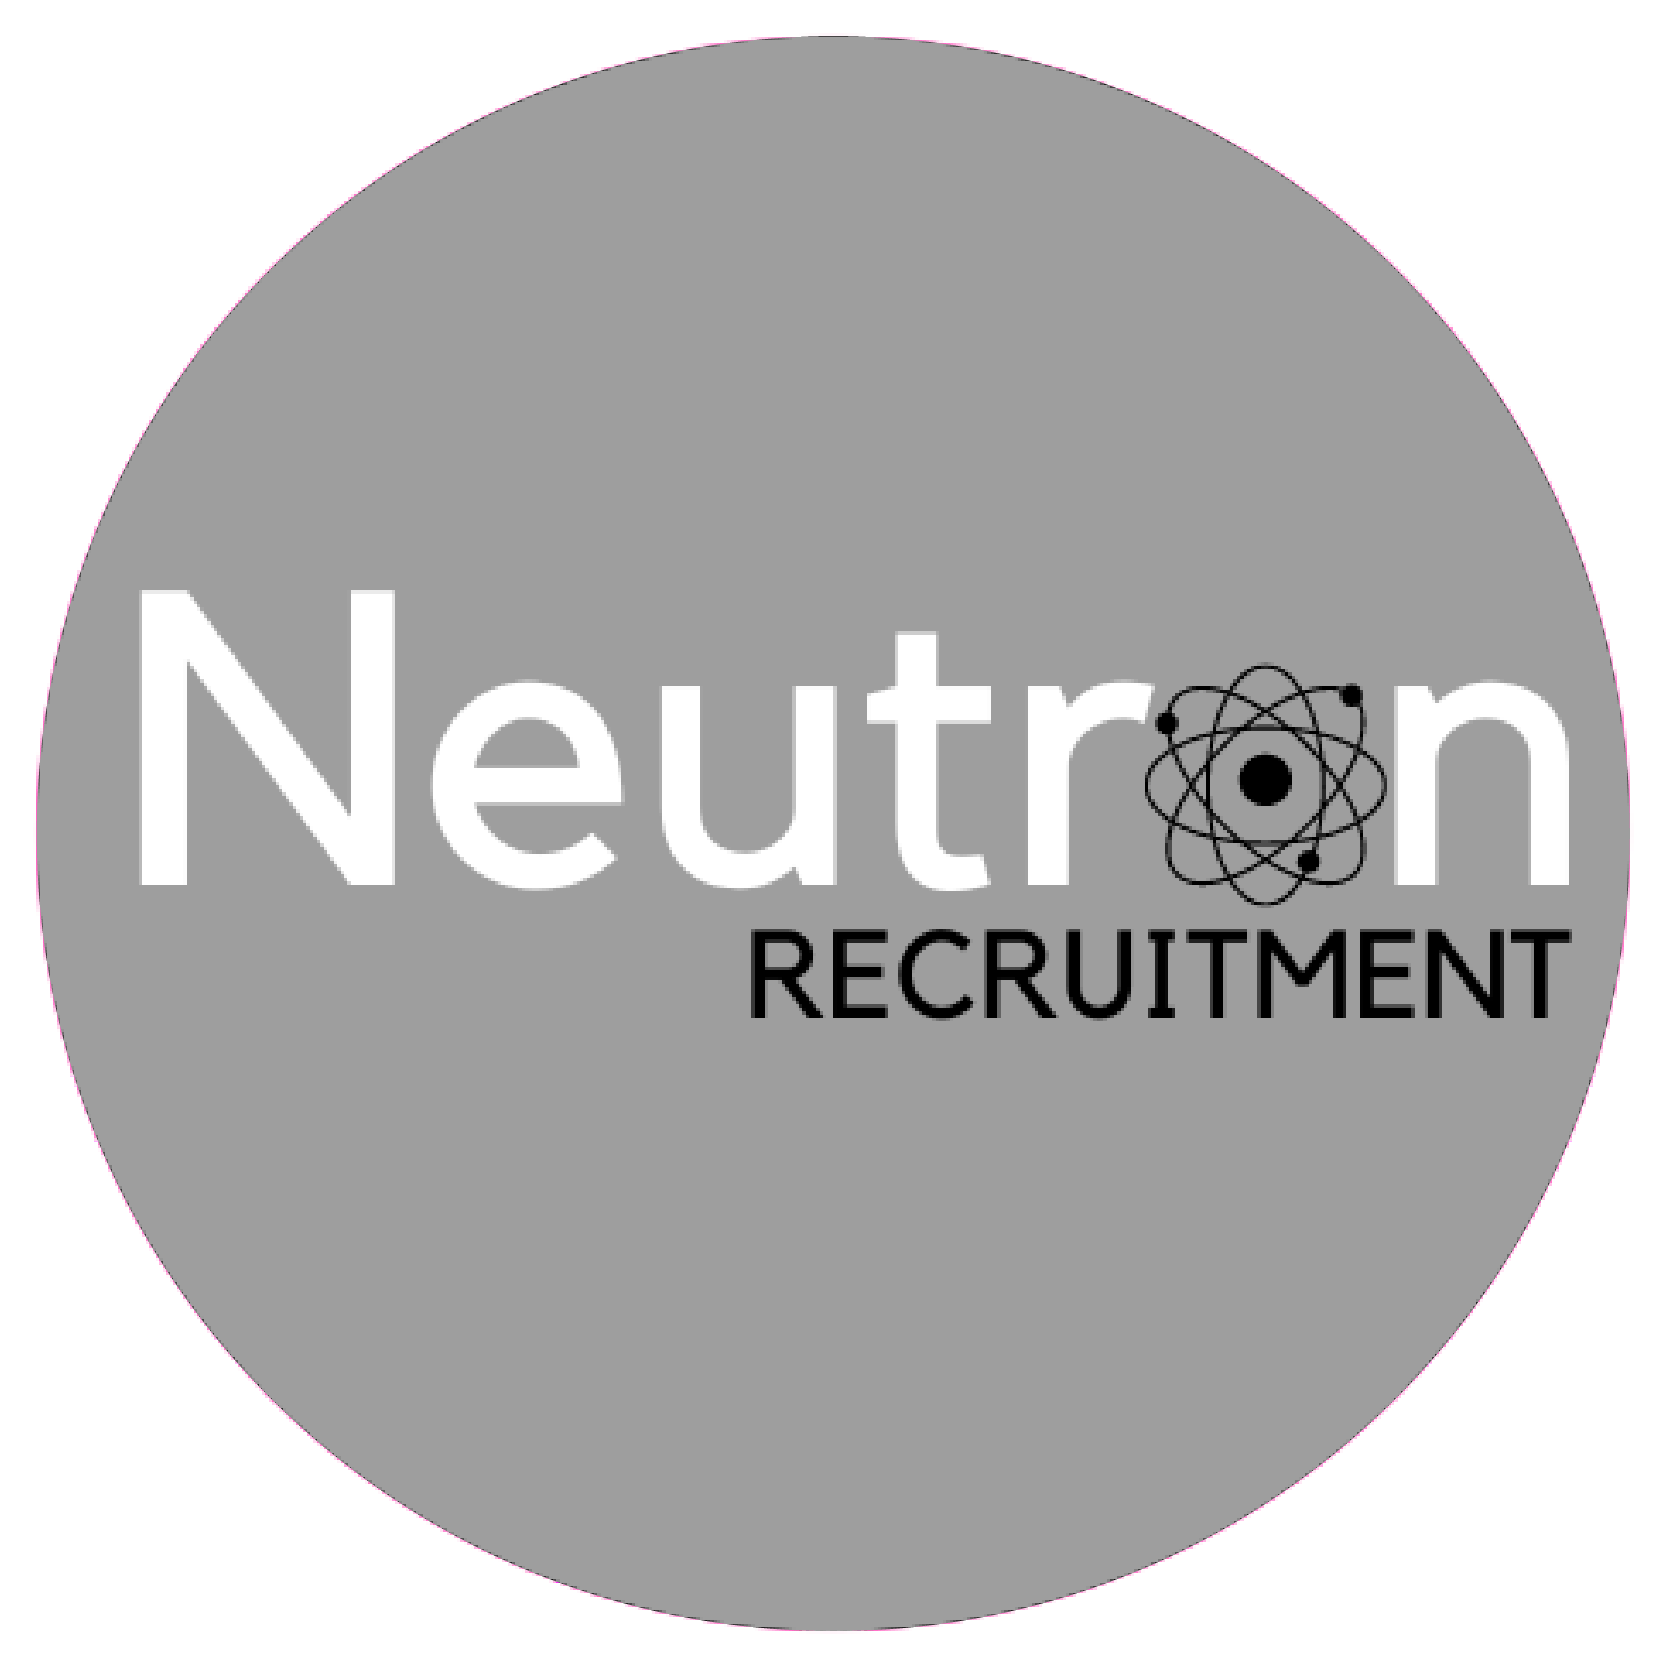 We're sponsored by Neutron Recruitment 